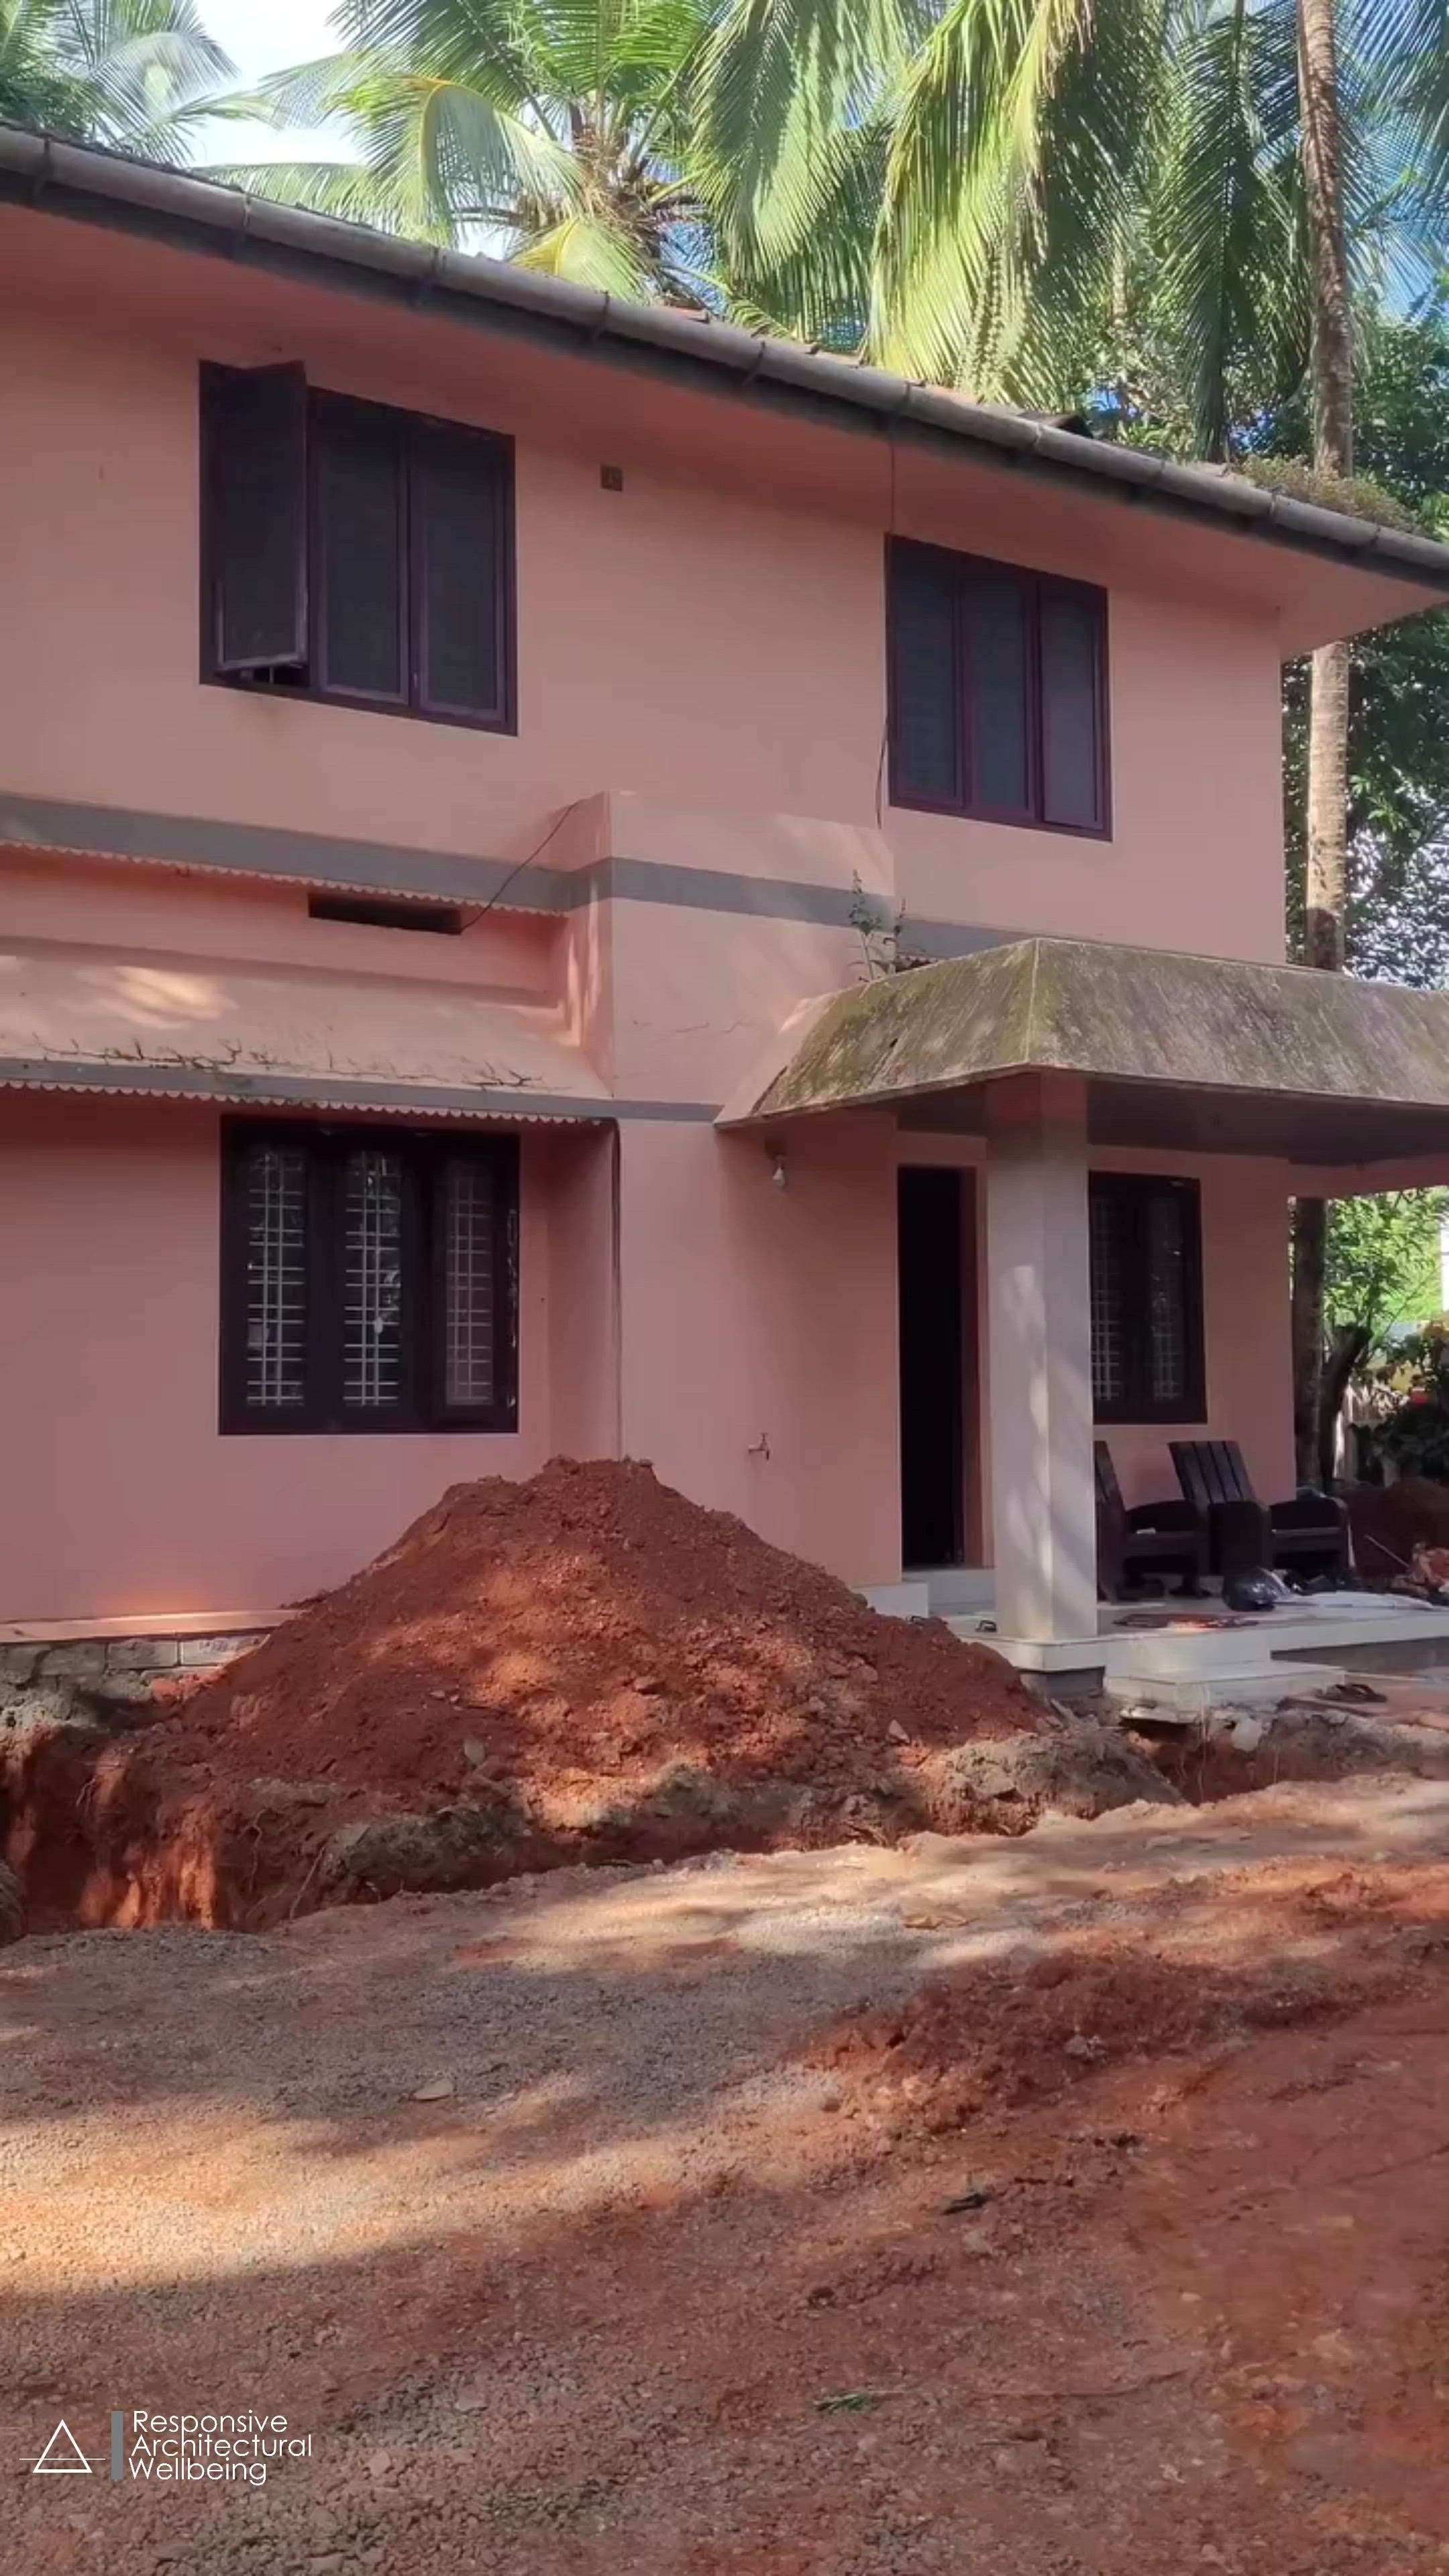 Renovation project
@palakkad #raw_architecture  #HouseRenovation  #SmallBudgetRenovation  #budget_home_simple_interi  #budgethomeplan  #architecturedesigns